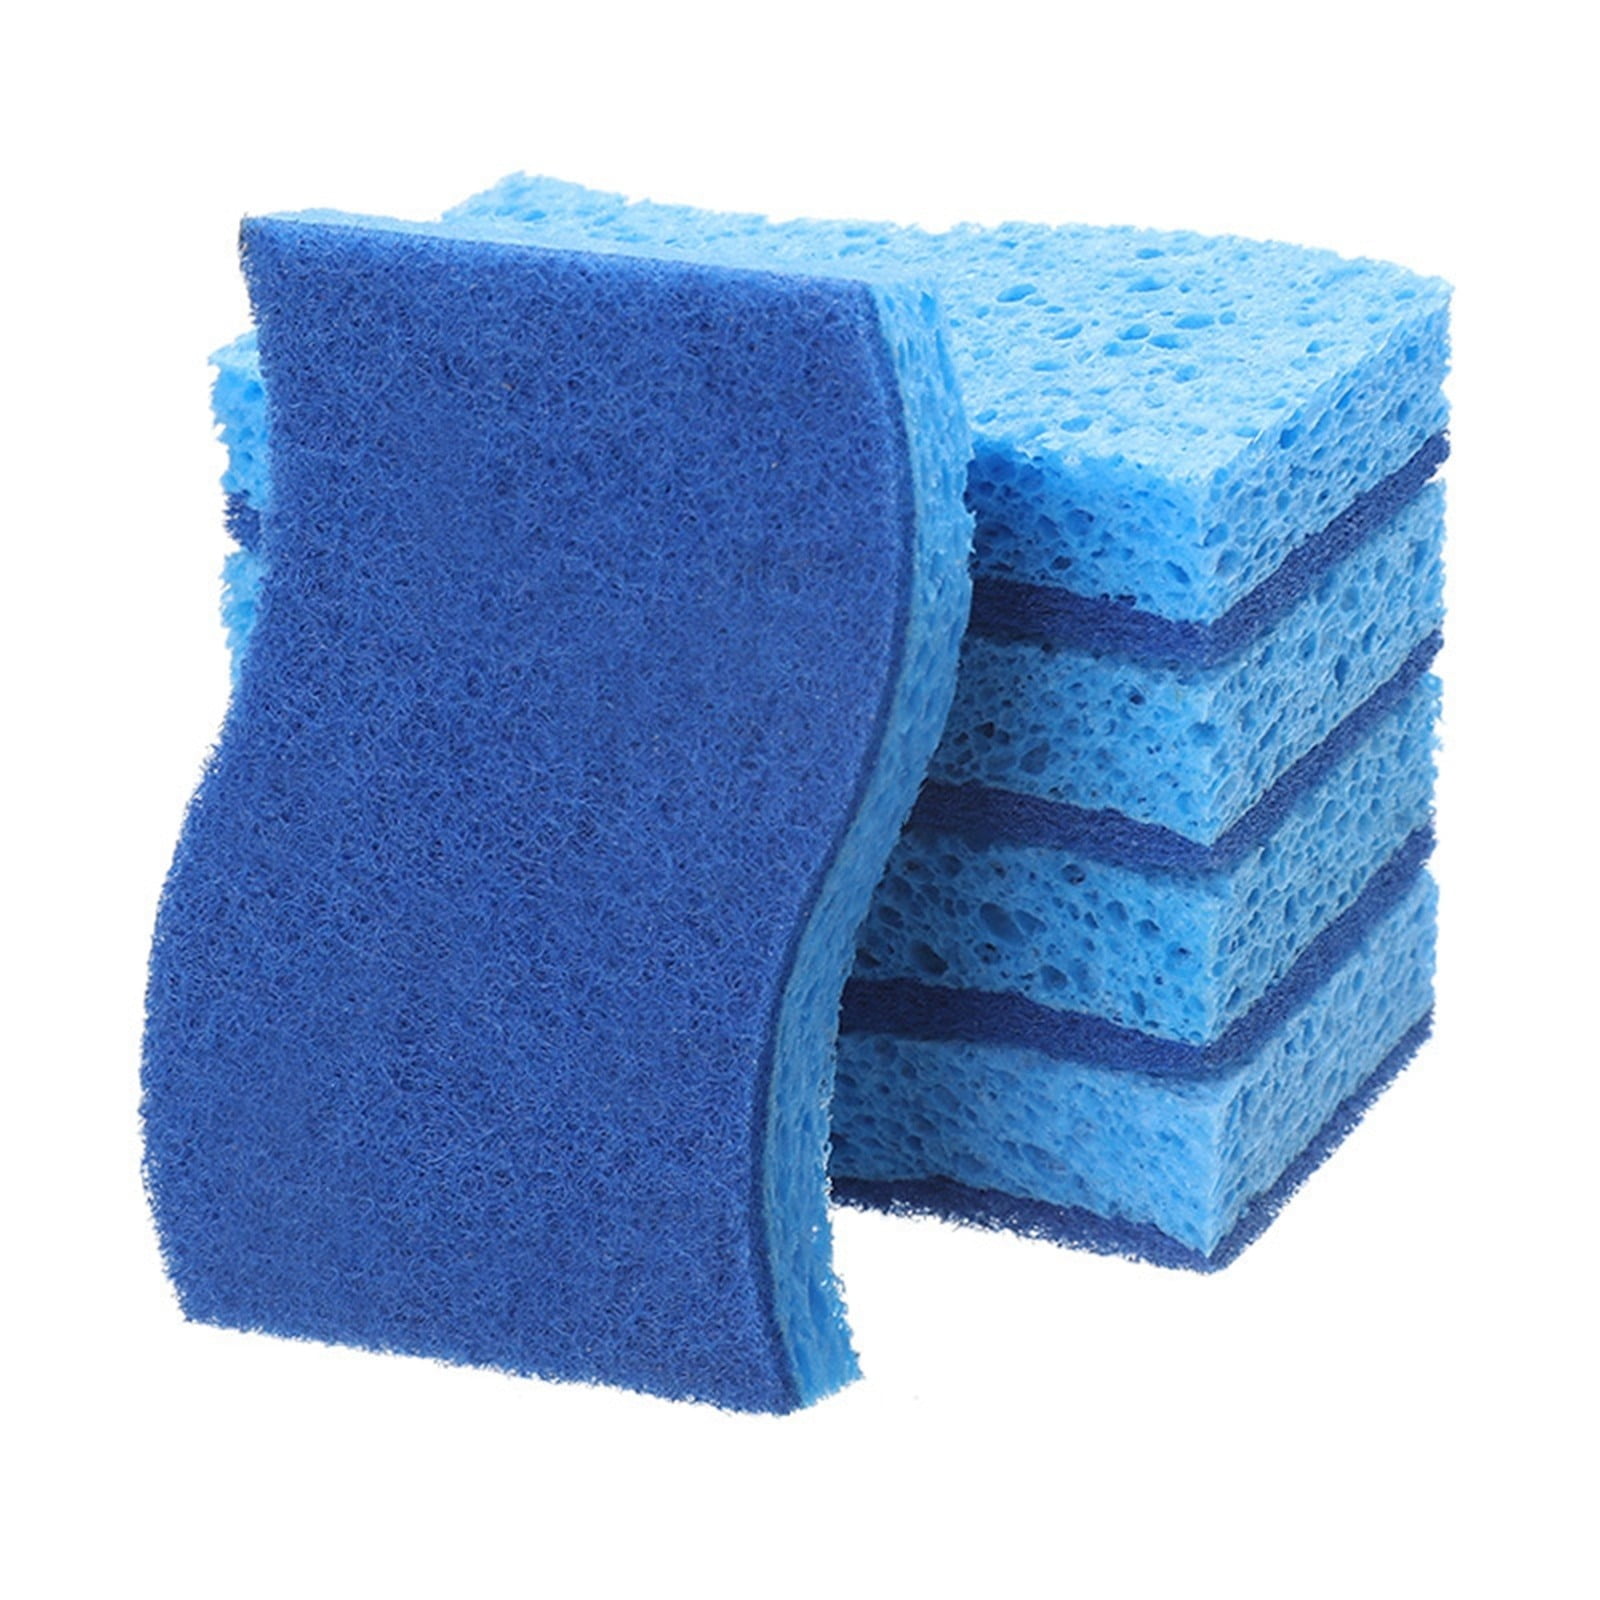 Washable Sponge Set of 2 Blue/gray Reusable Sponges, Washable Scrubbie,  Cotton Waffle Weave and Cotton French Terry,eco Friendly Dish Sponge 